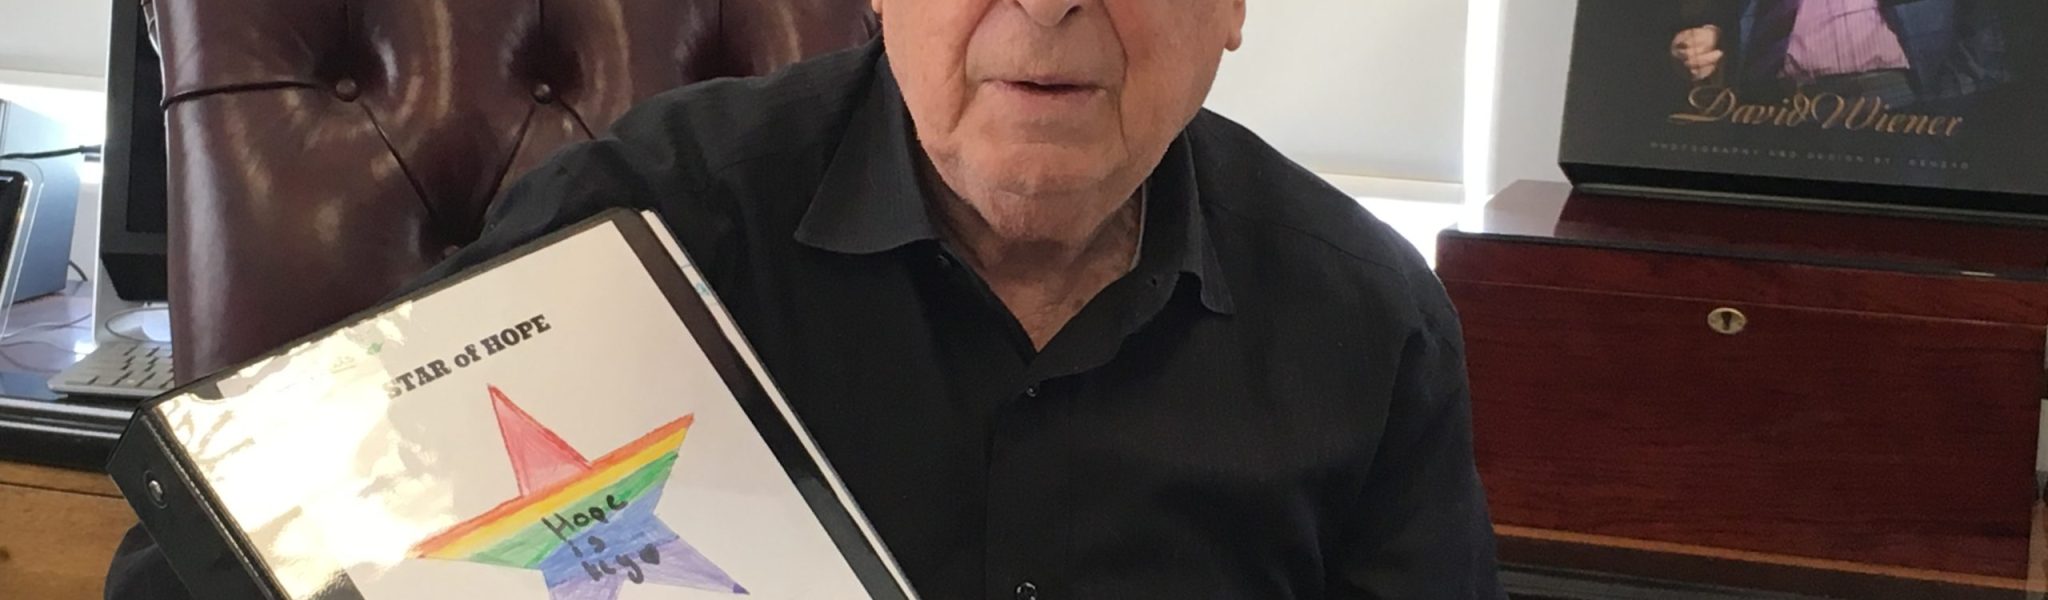 Holocaust survivor, David Weiner, was honored with paper